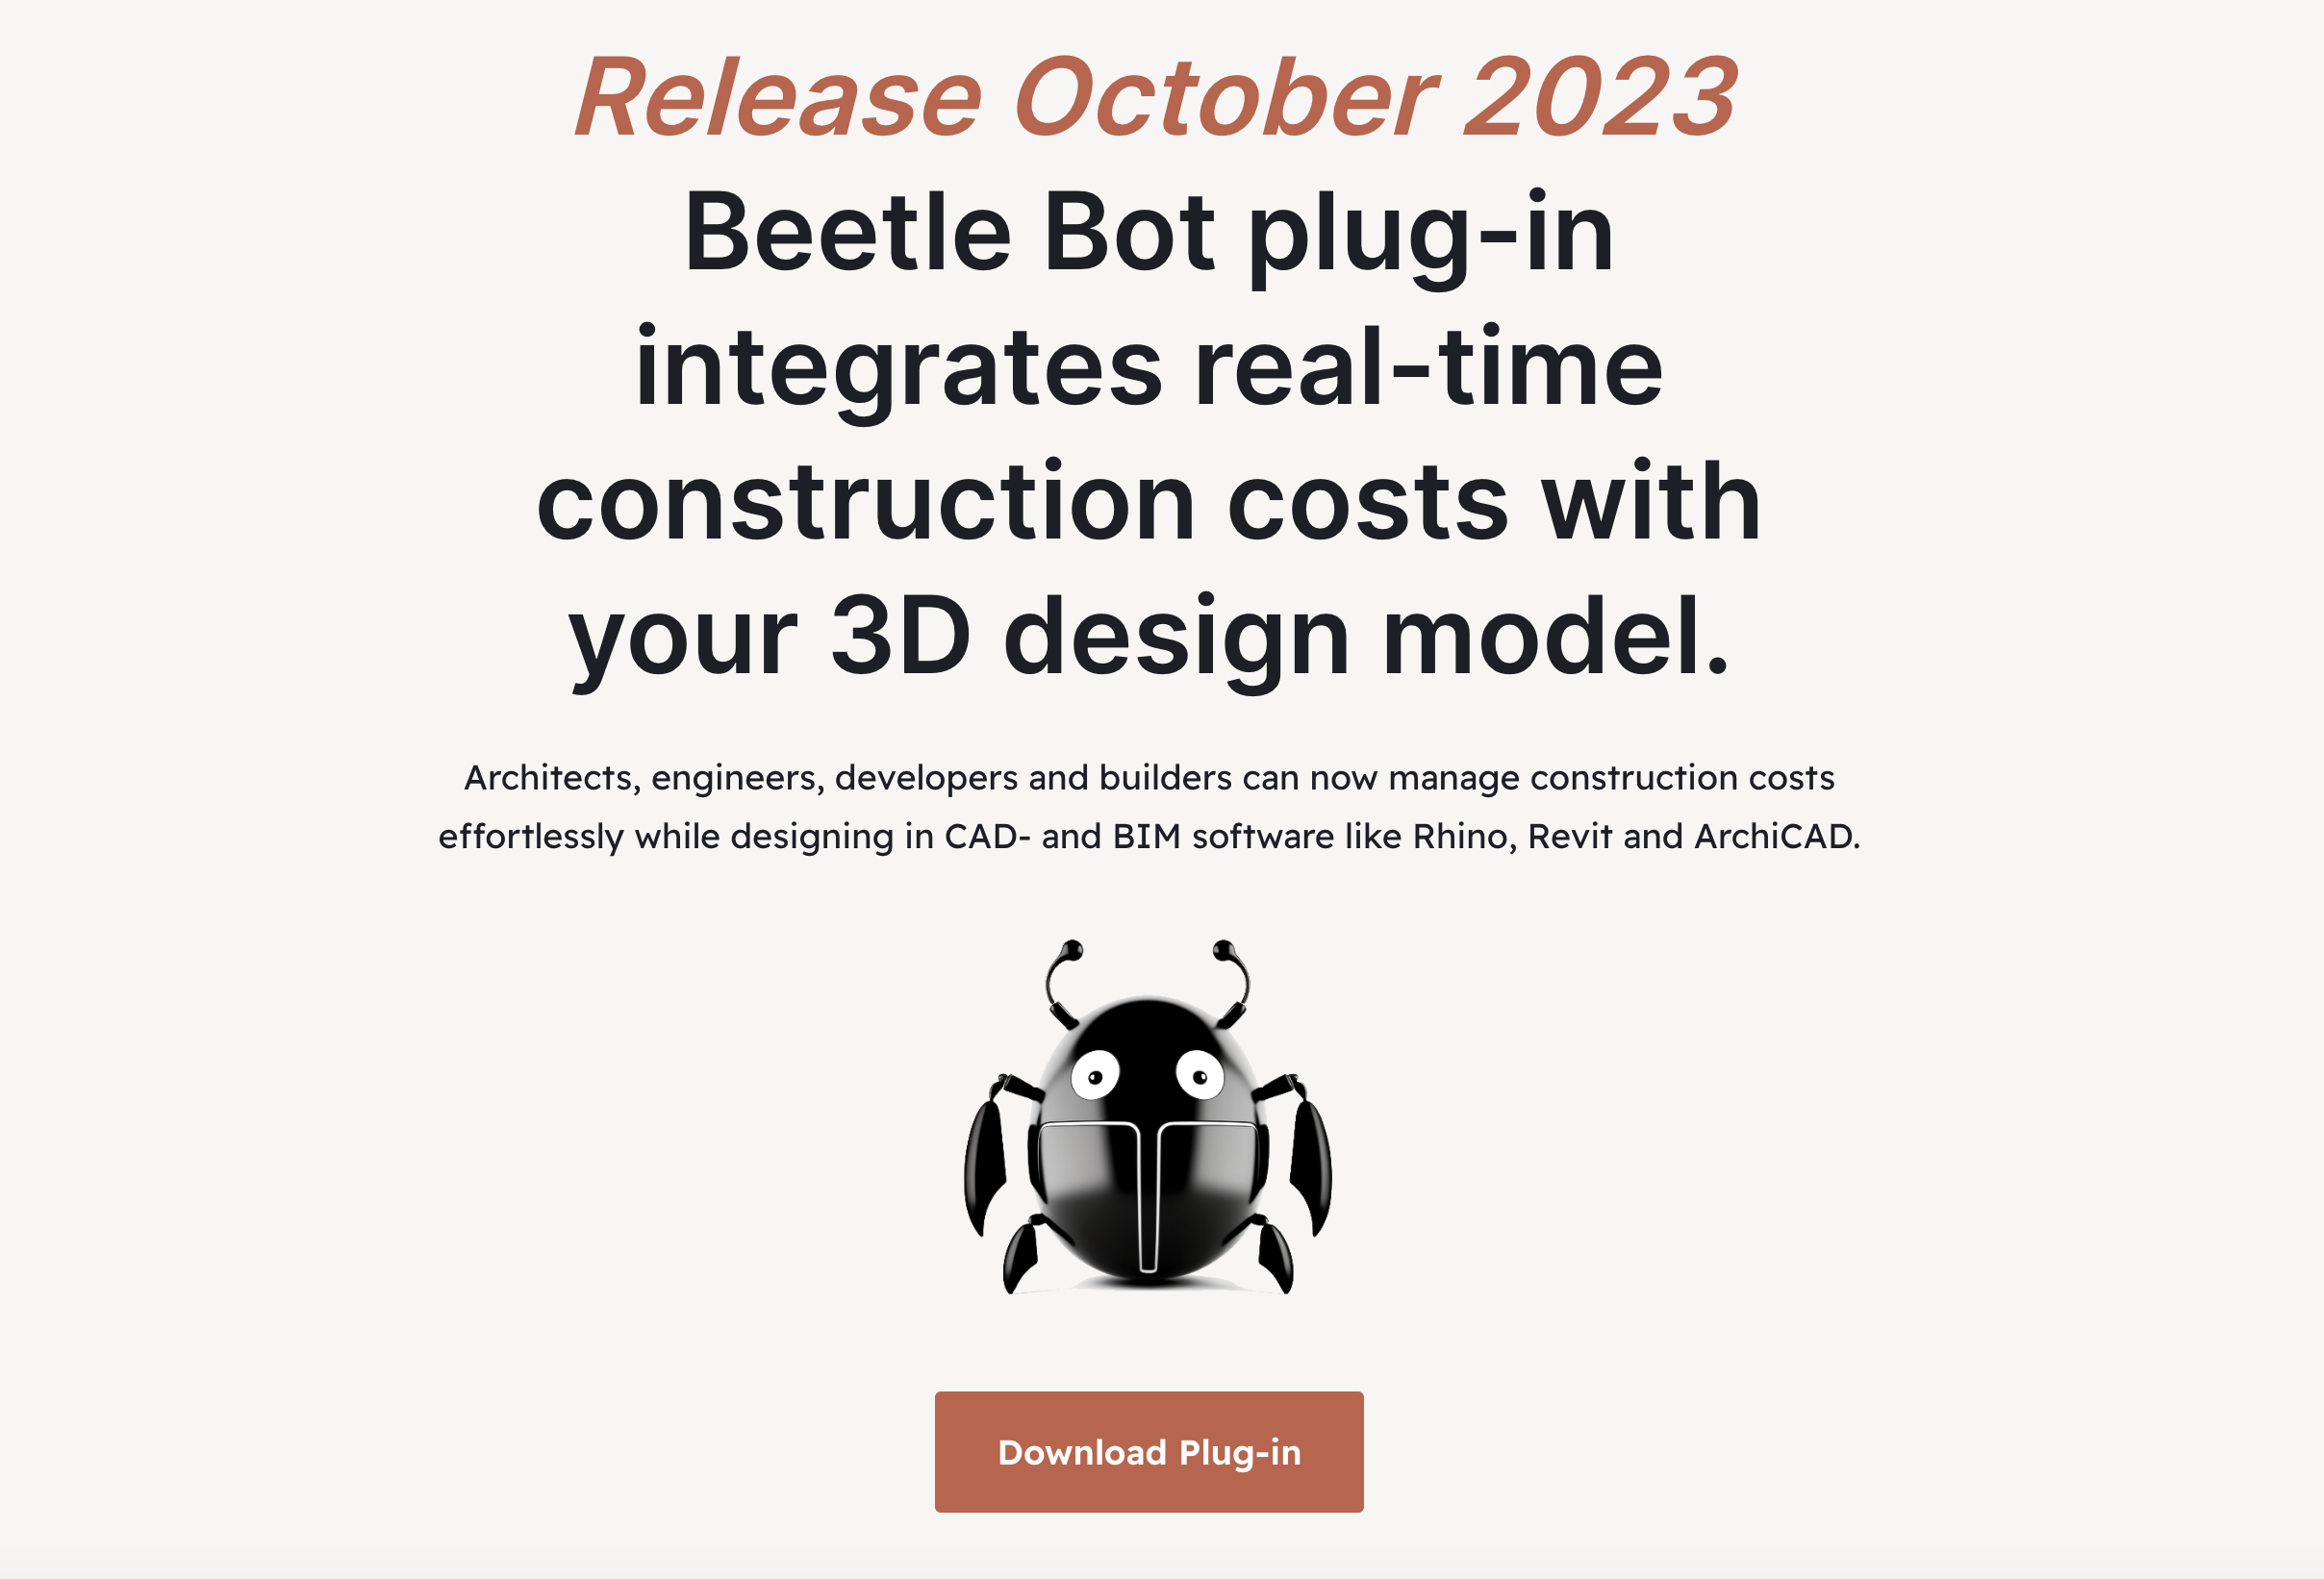 Beetle Bot plug-in: inzicht realtime bouwkosten